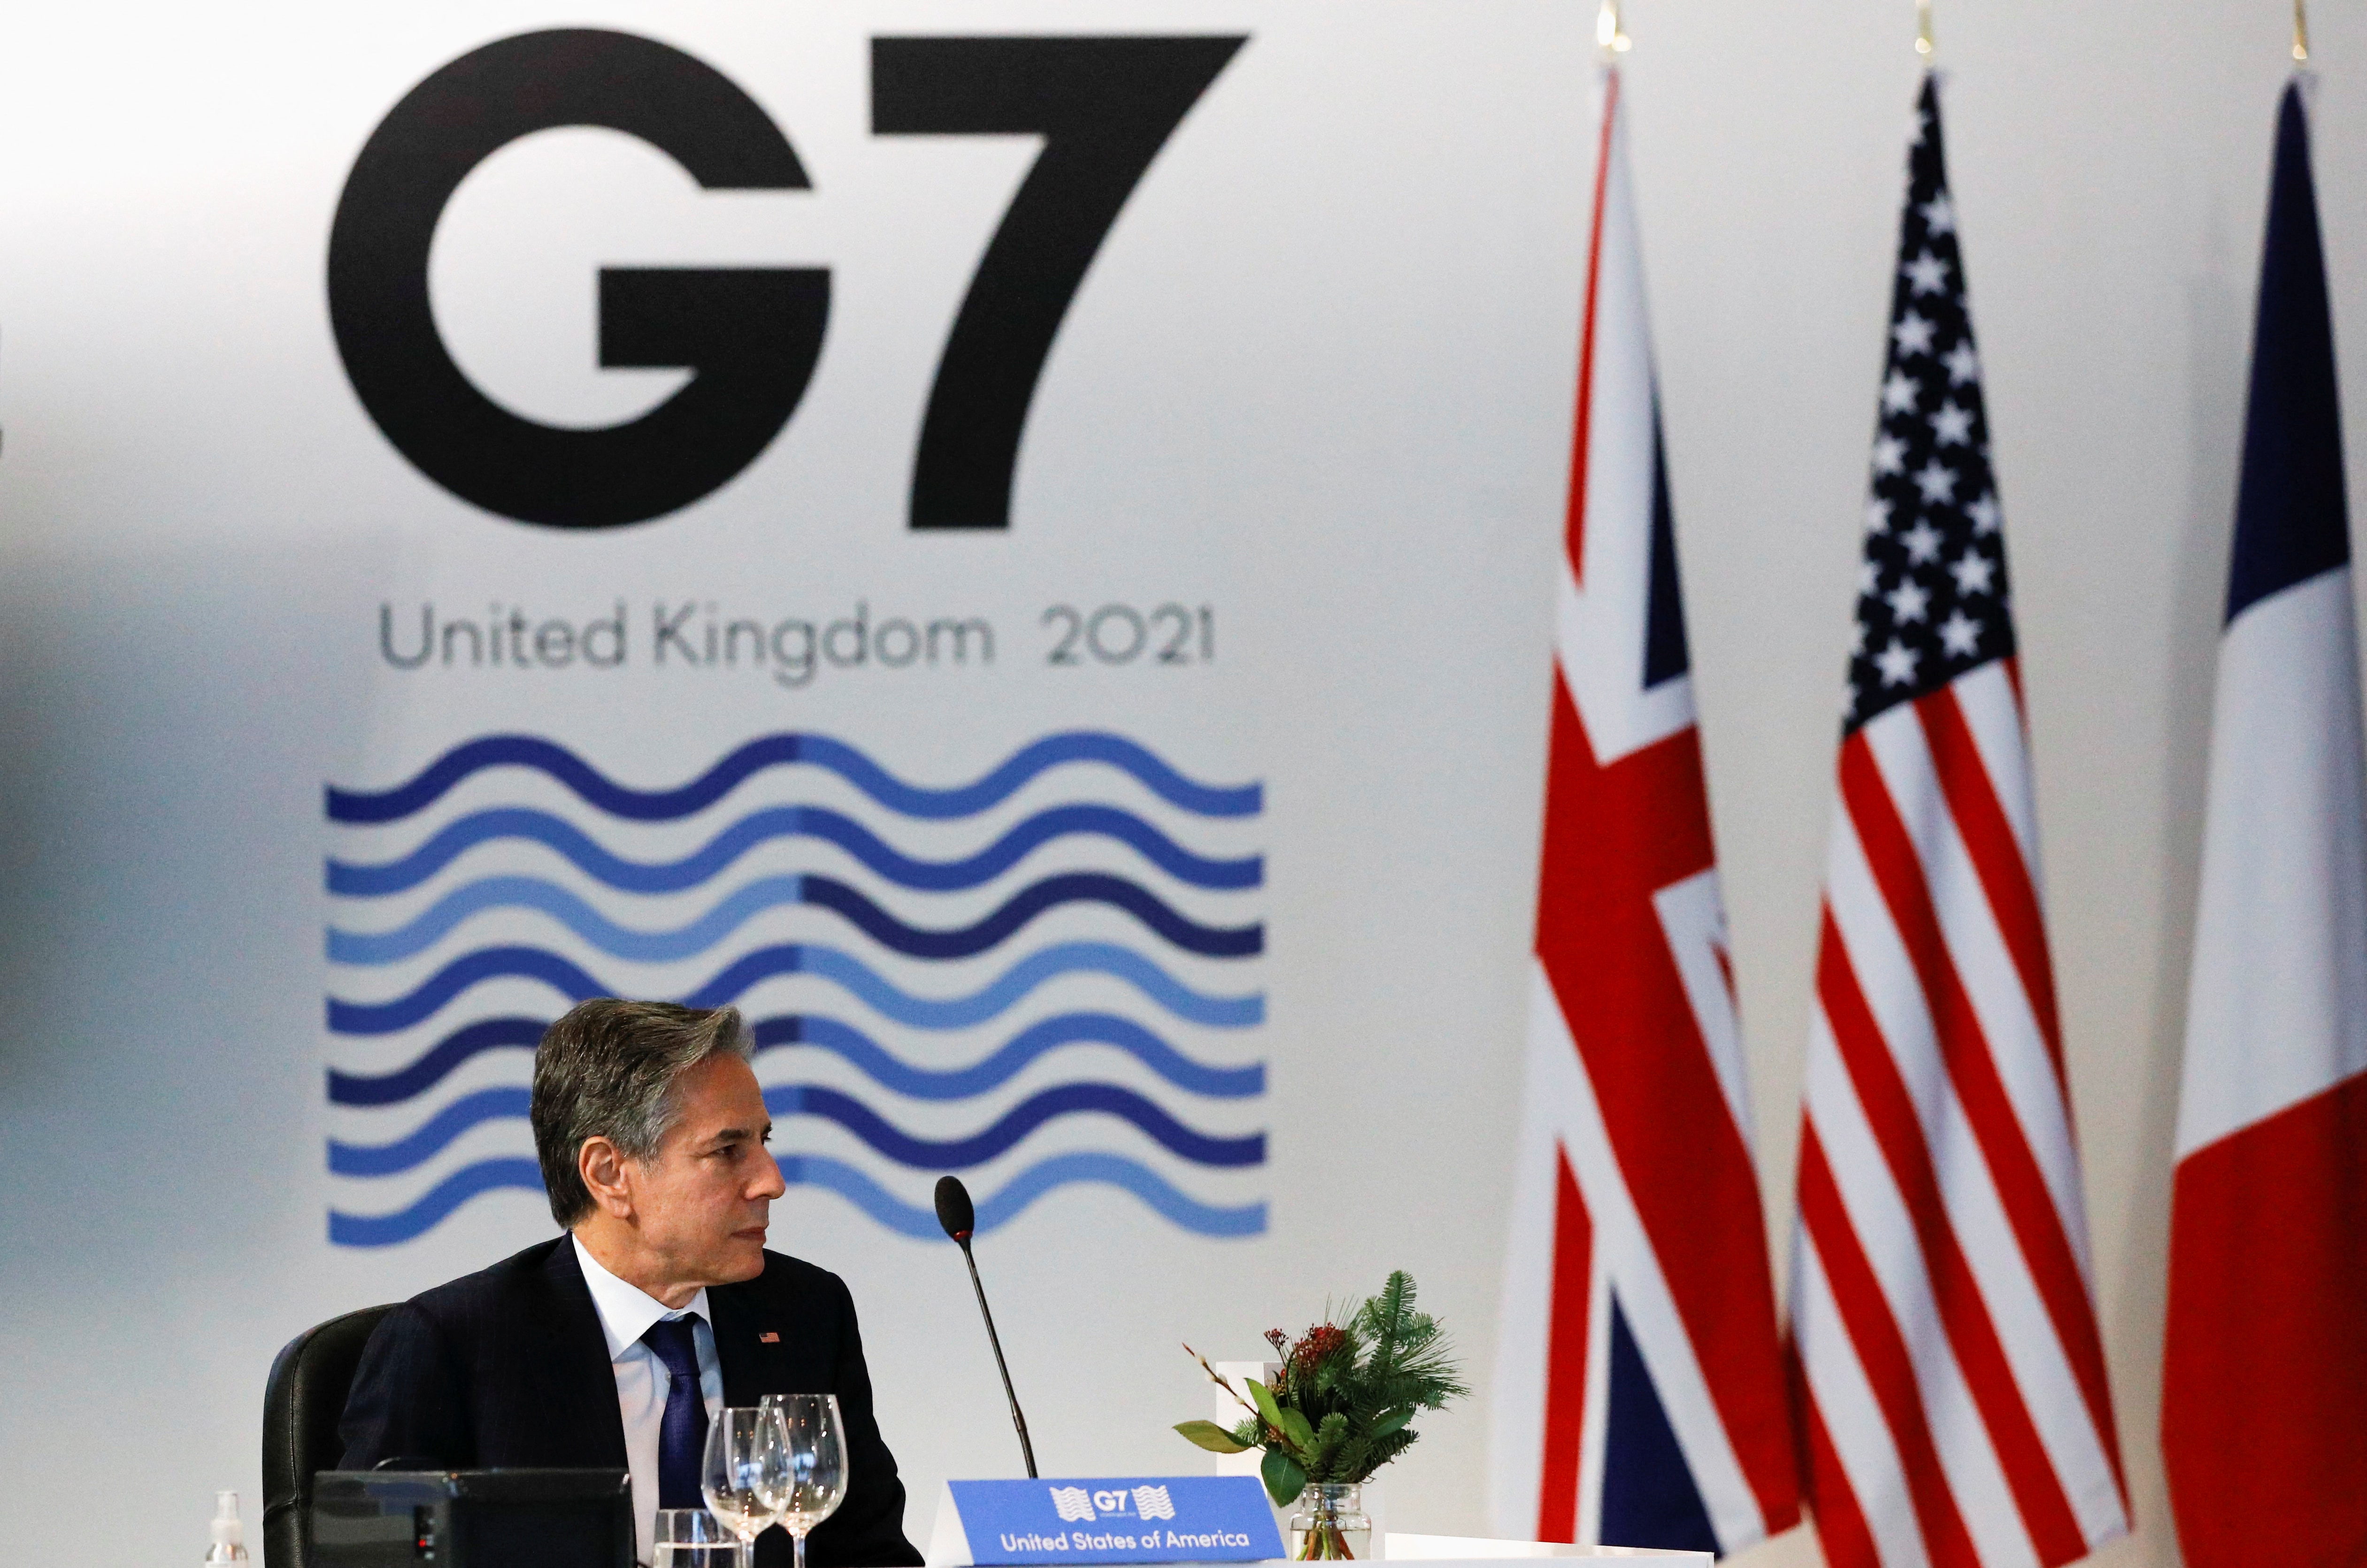 Blinken attends G7 meeting in united front against ‘hostile actors’ amid concerns of Russia, Ukraine tussle